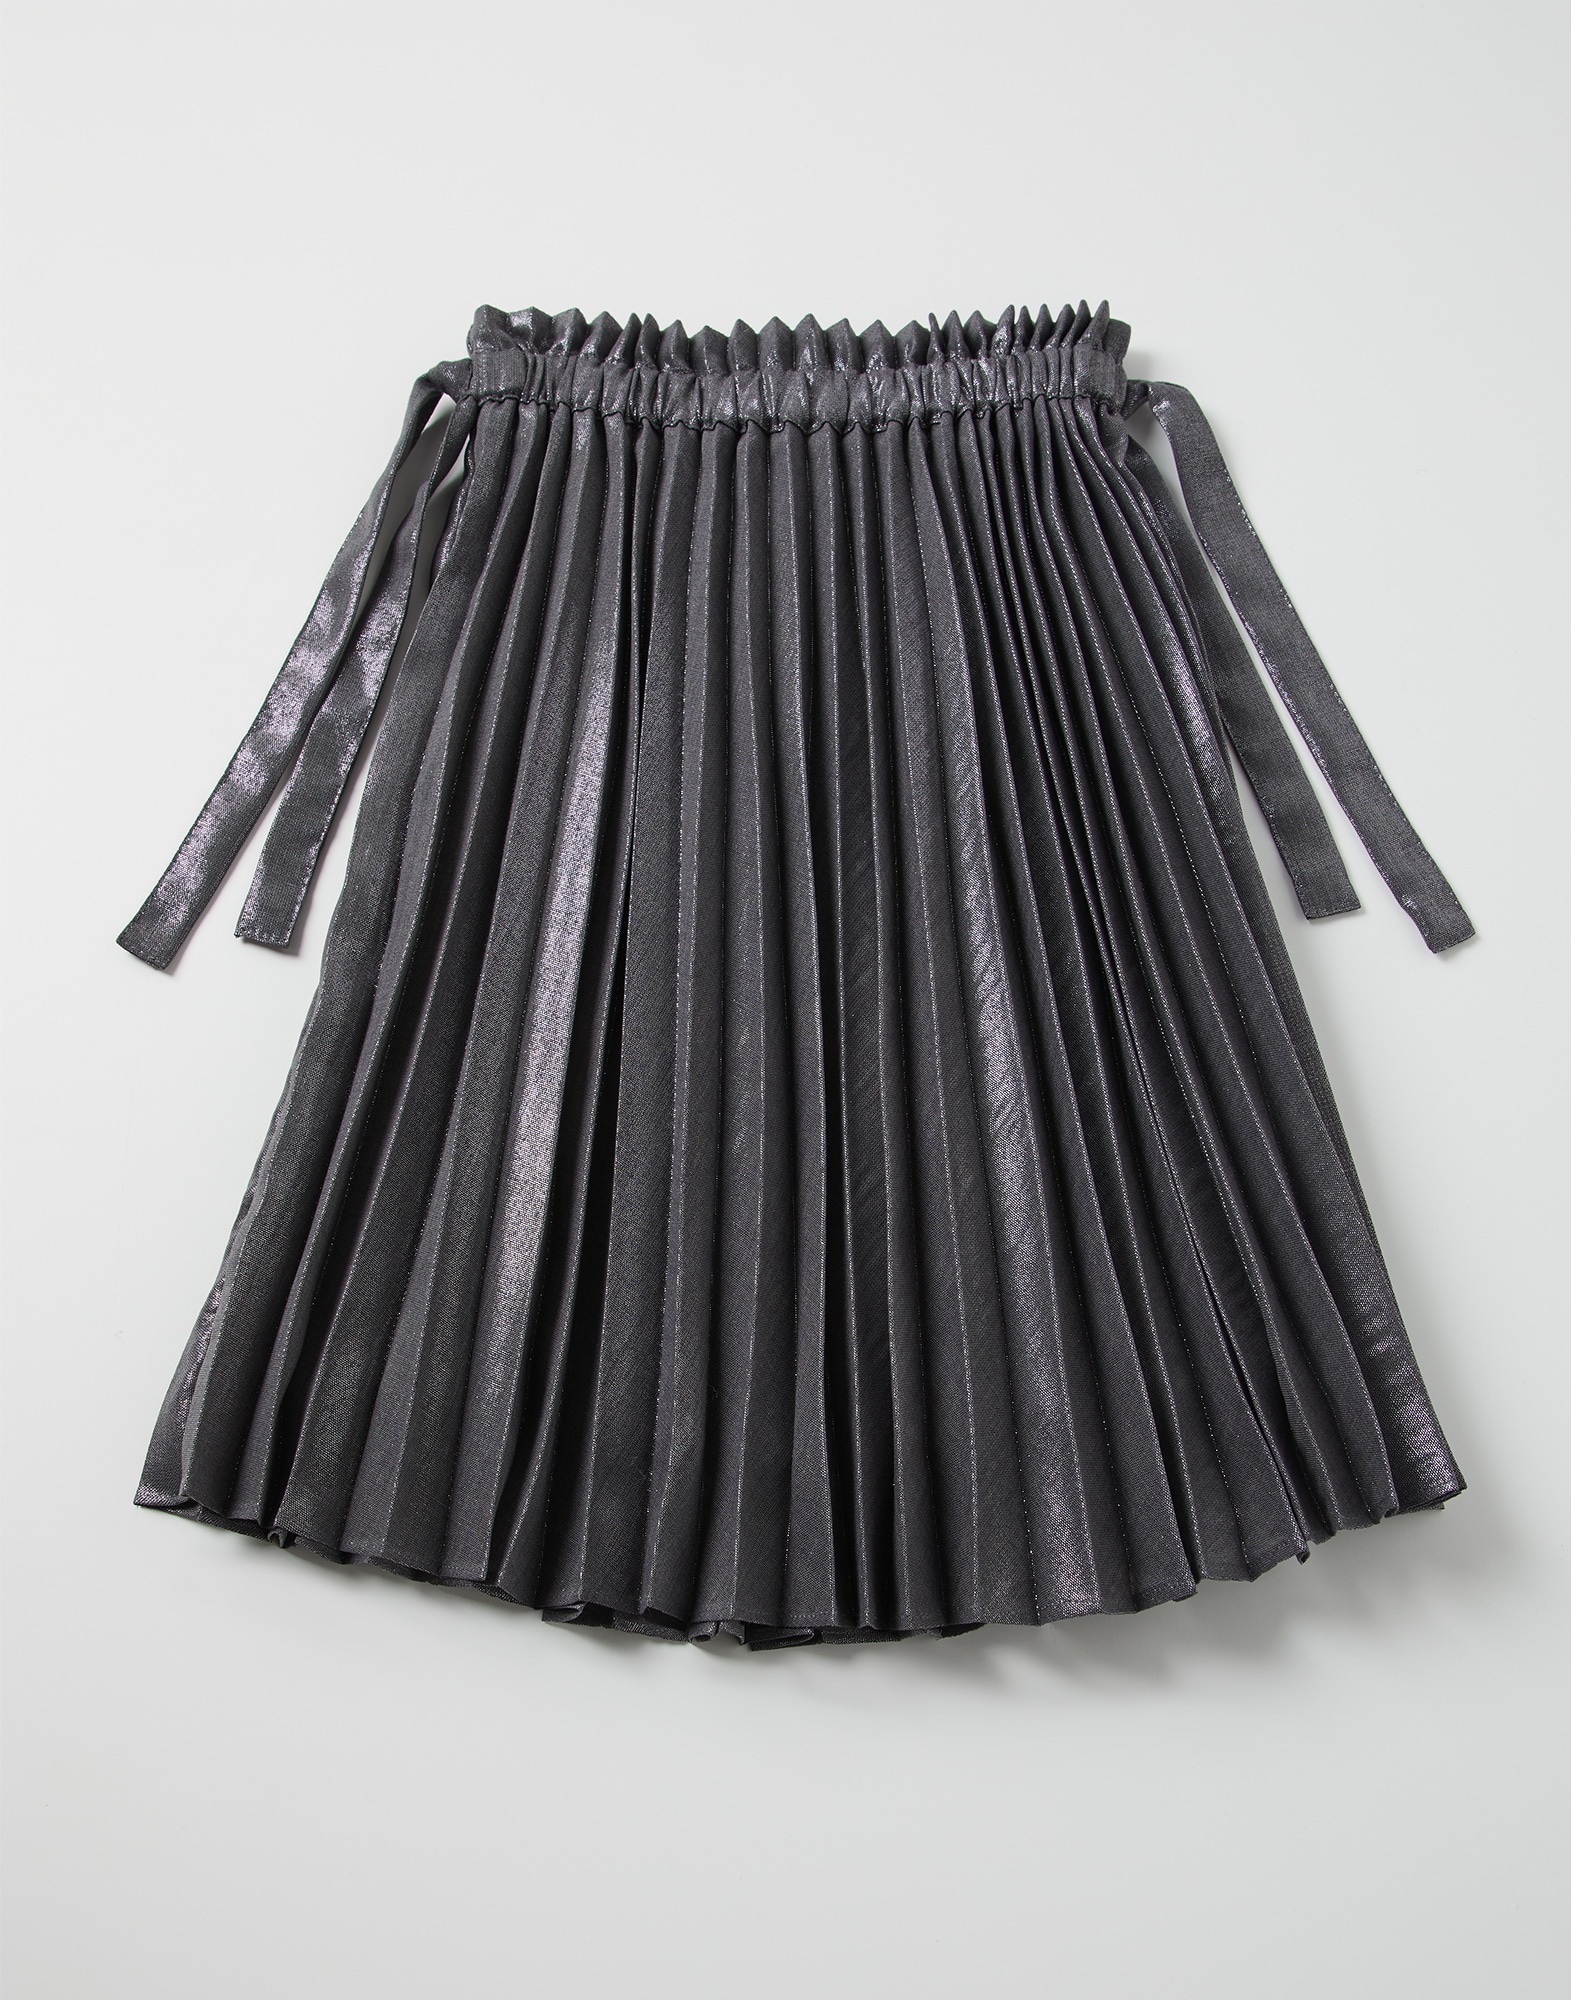 Virgin wool skirt